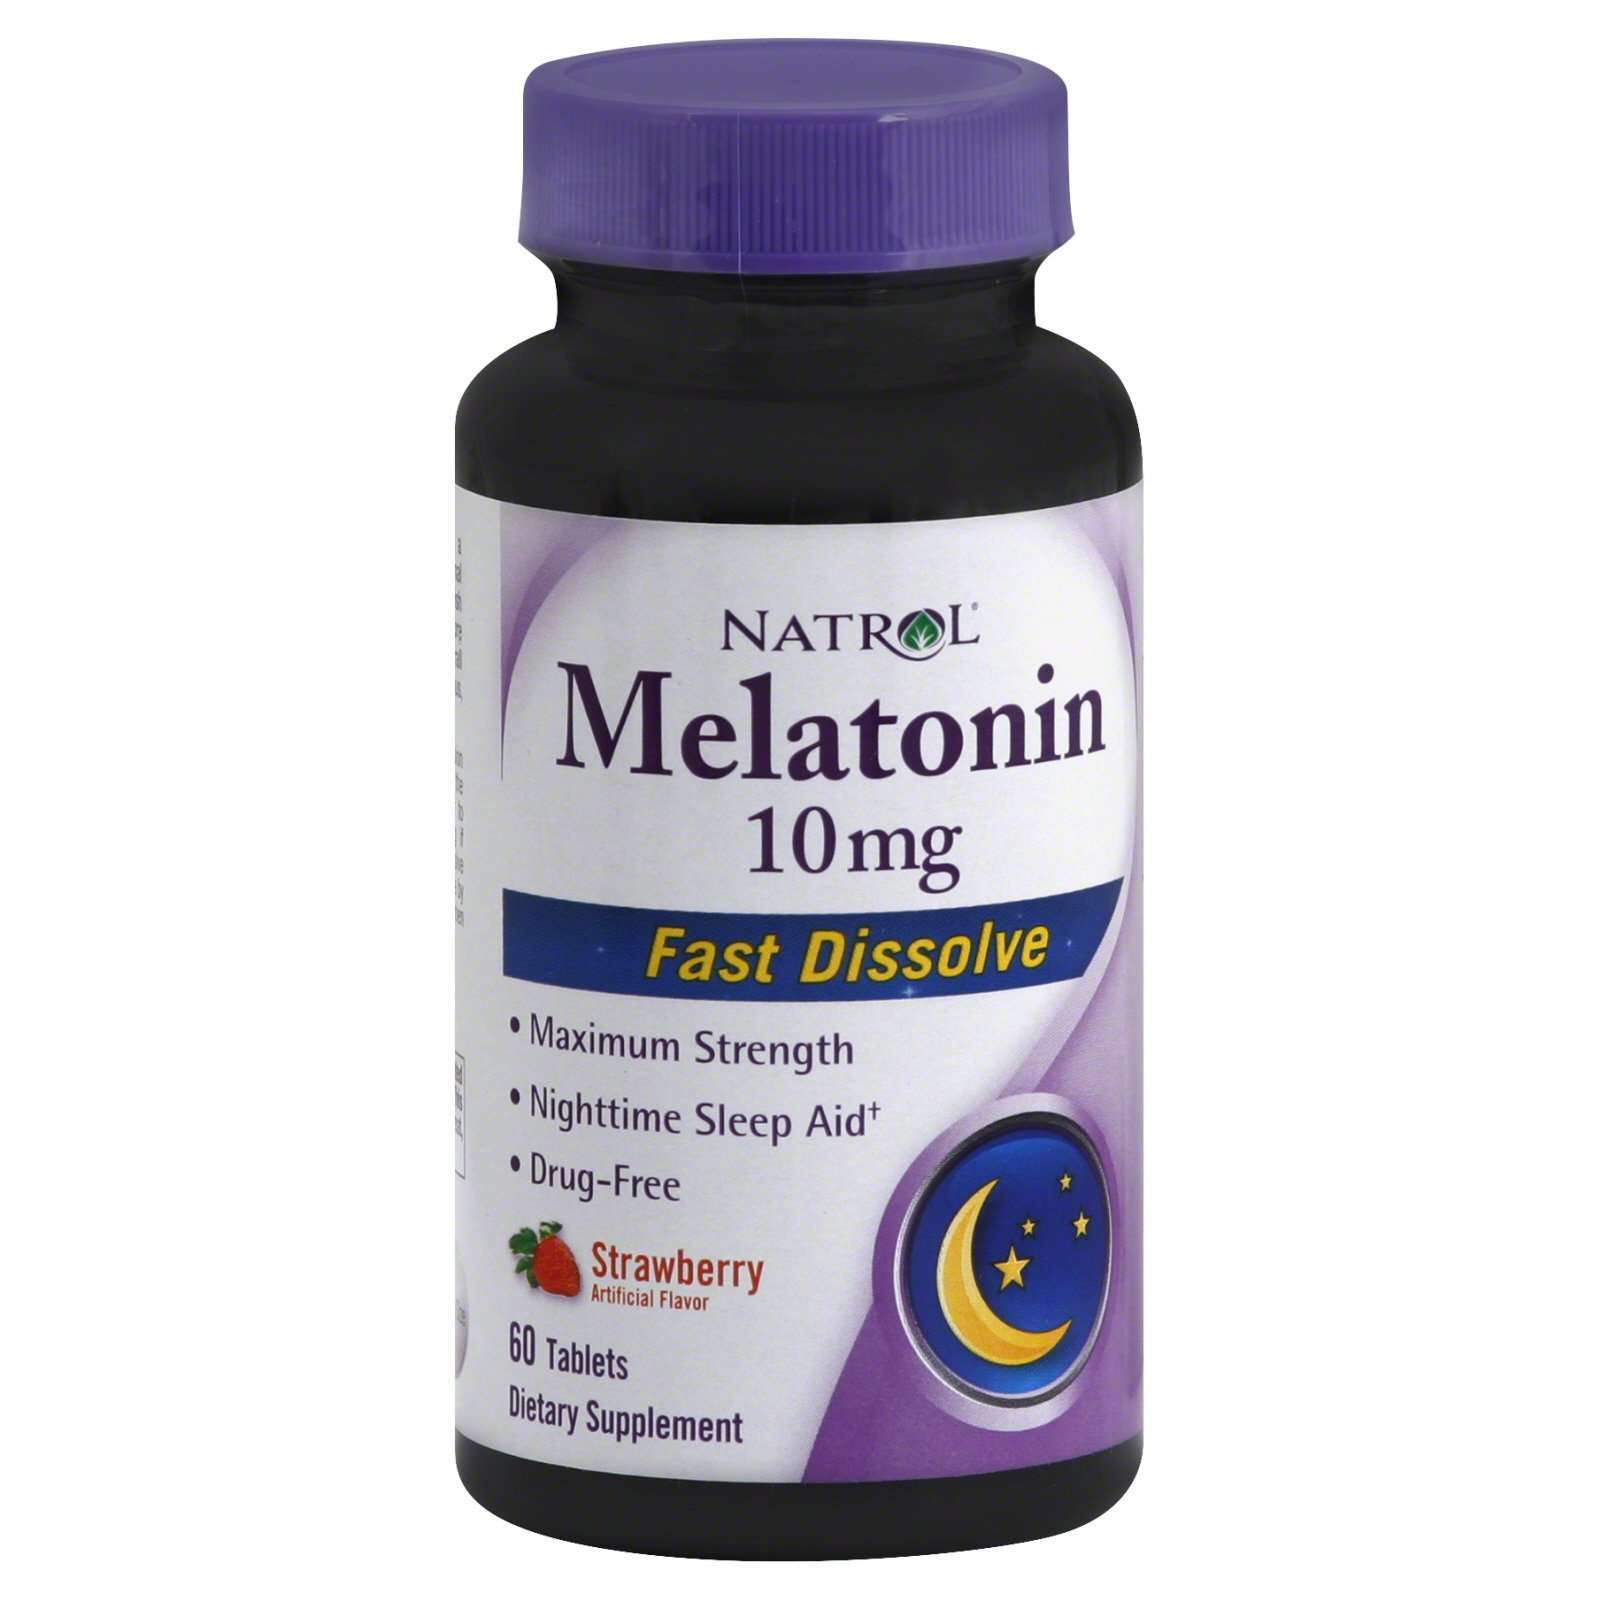 Natrol Melatonin Fast Dissolve, 10 mg, 60 Tablets